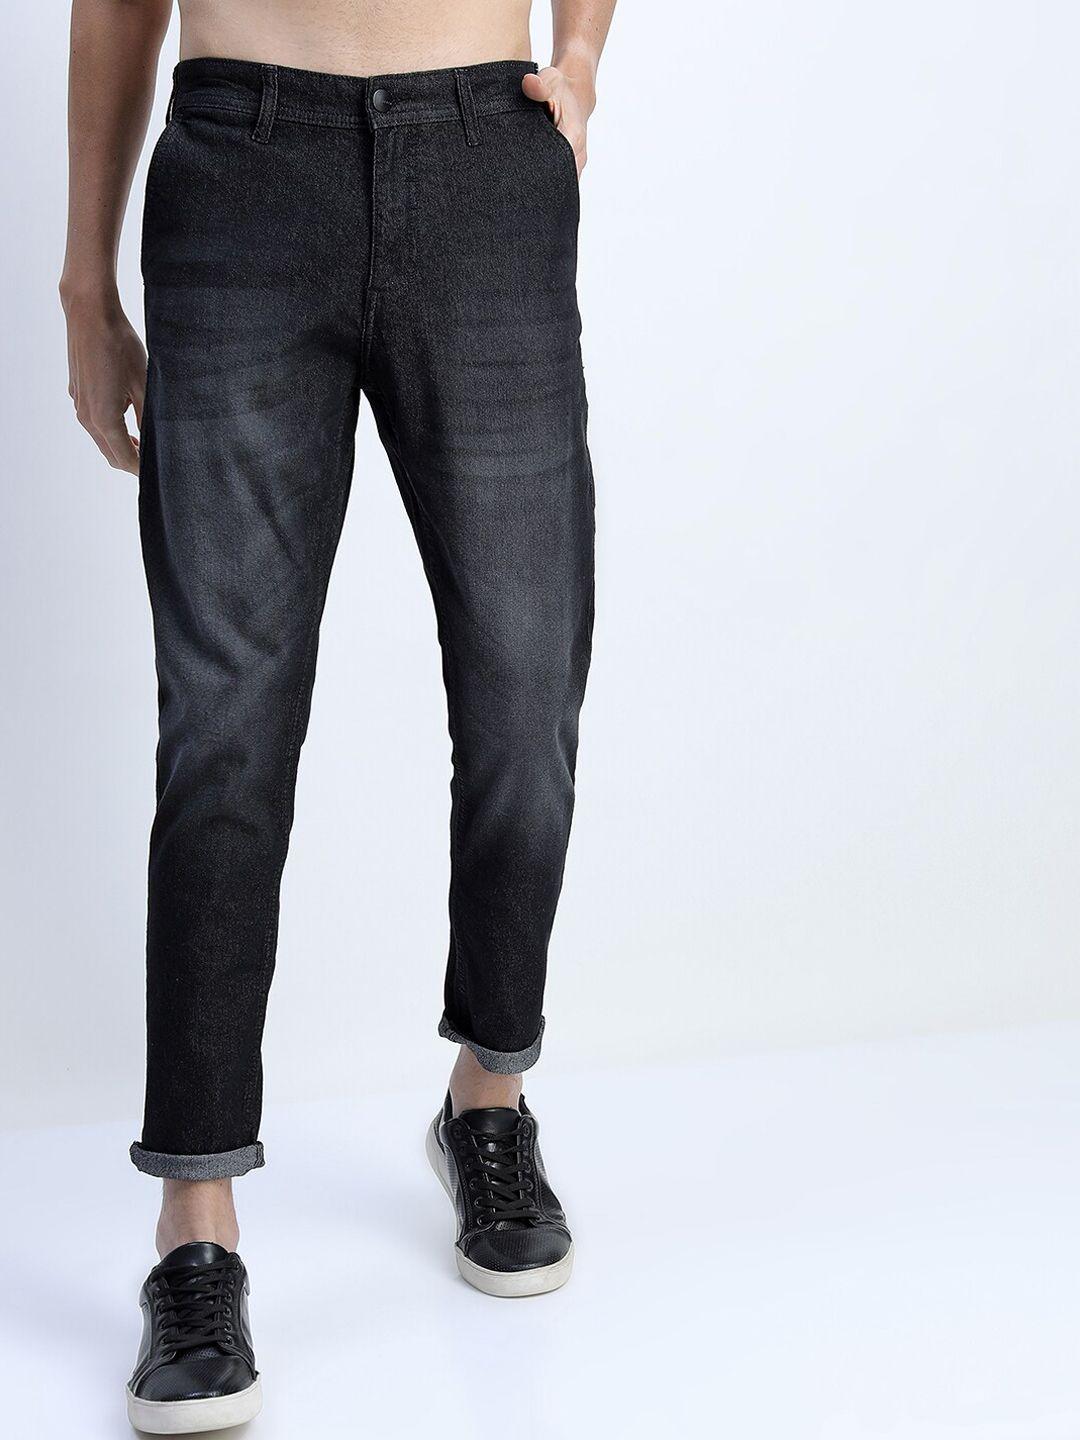 ketch-men-black-slim-fit-stretchable-jeans